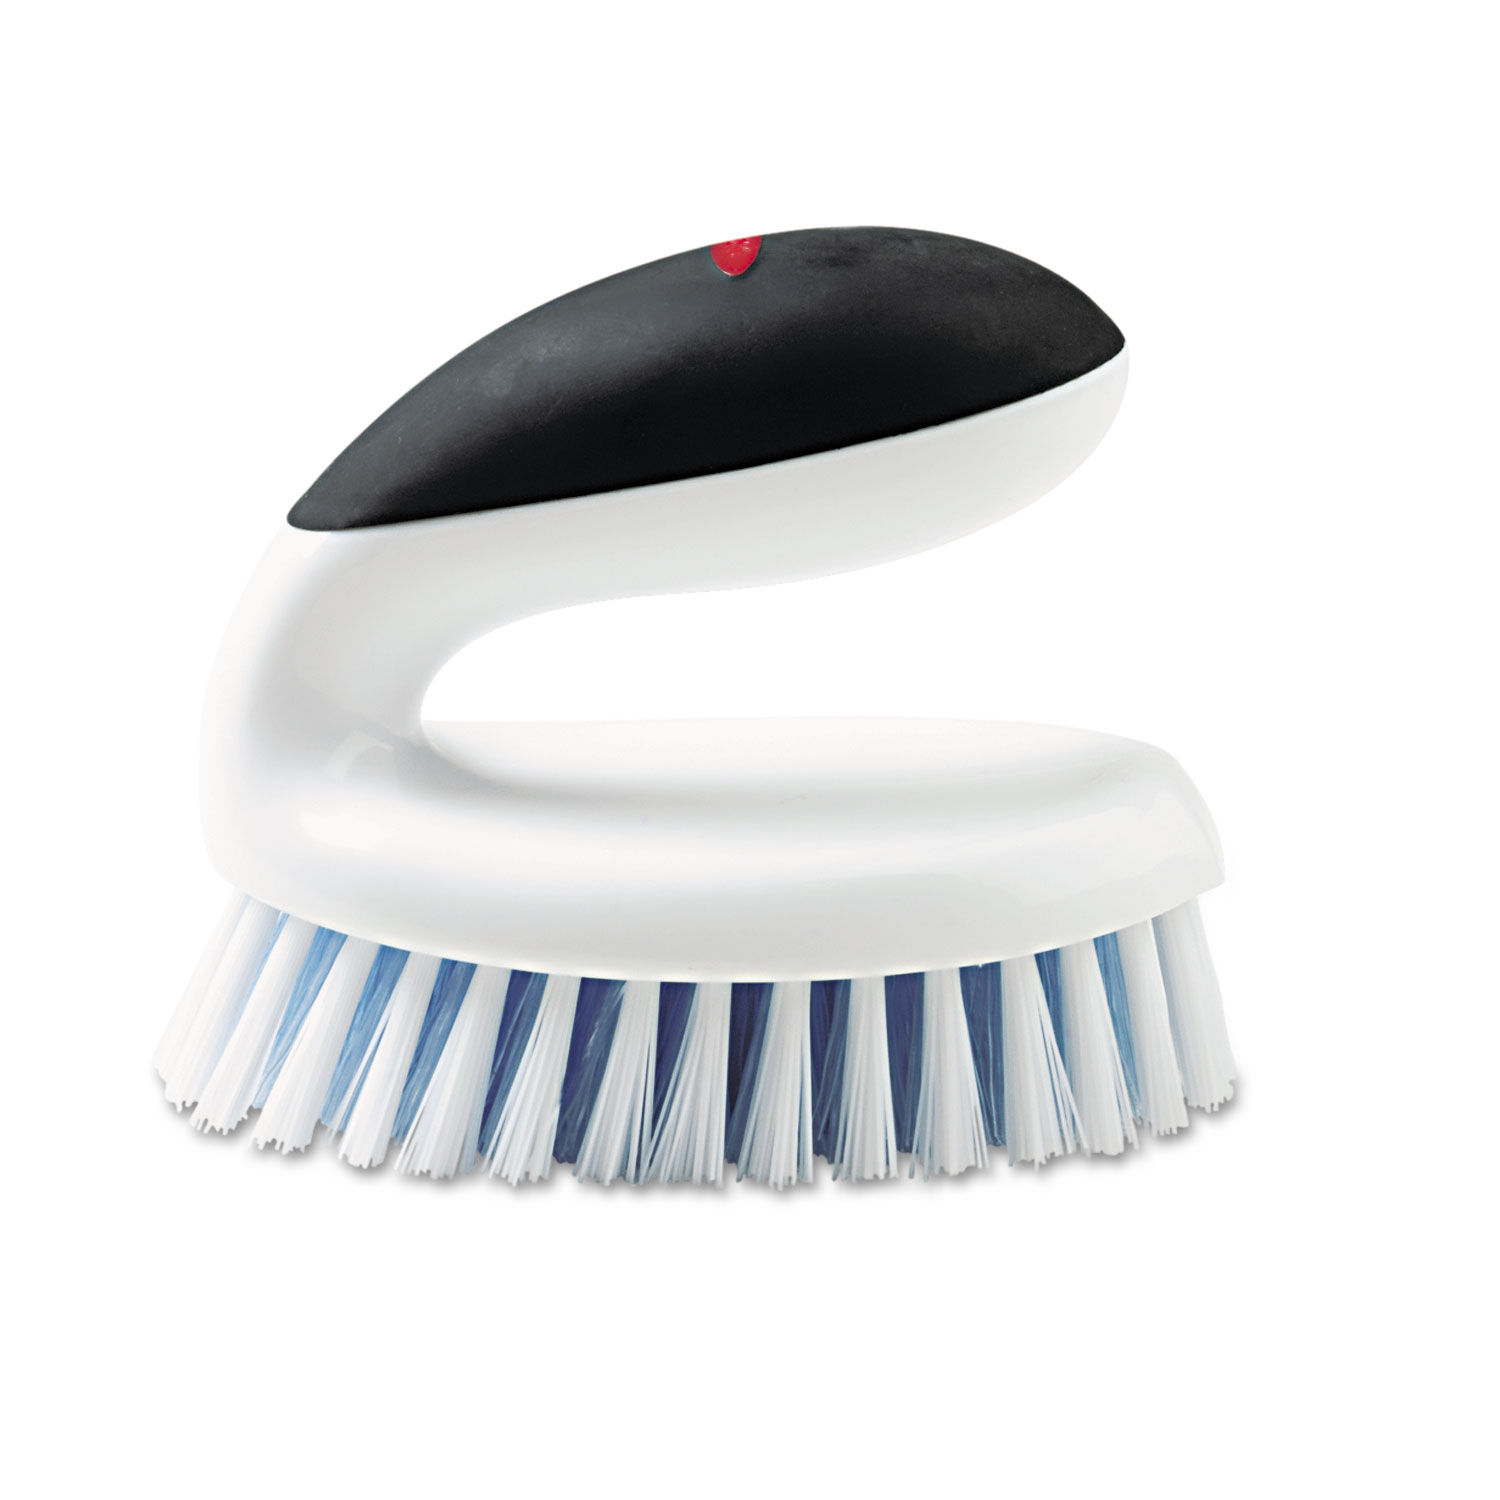 OXO Good Grips Household Scrub Brush, White/Blue Nylon/Polypropylene  Bristles, 5 Brush, 5 Black/White Handle (33881)